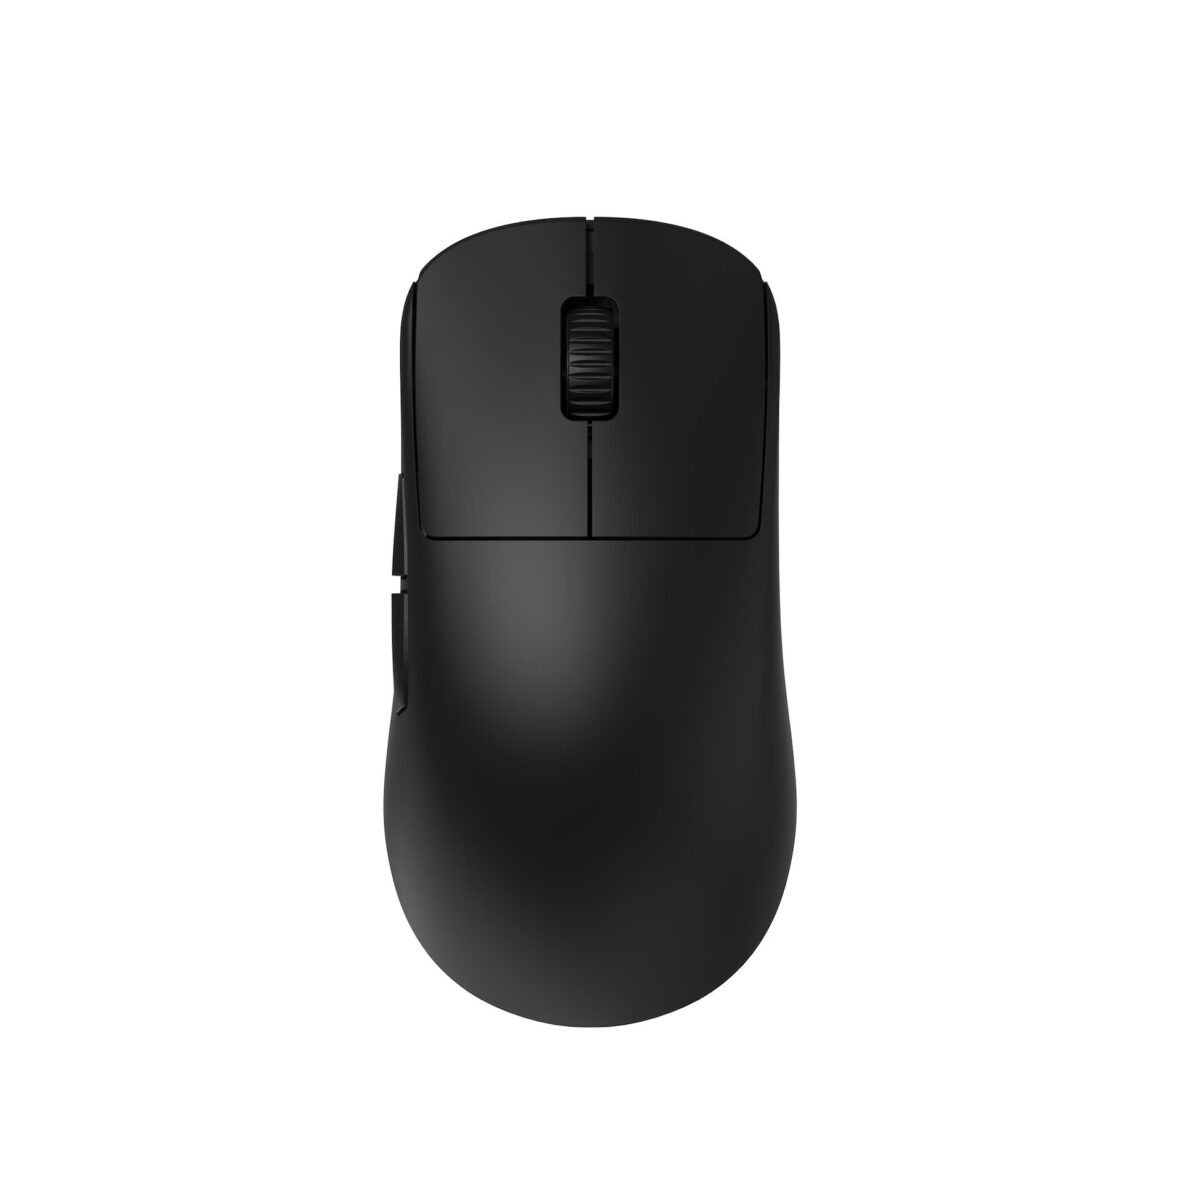 Endgame Gear OP1we Wireless Gaming Mouse - black - Pro GamersWare 1.28.63.12.011